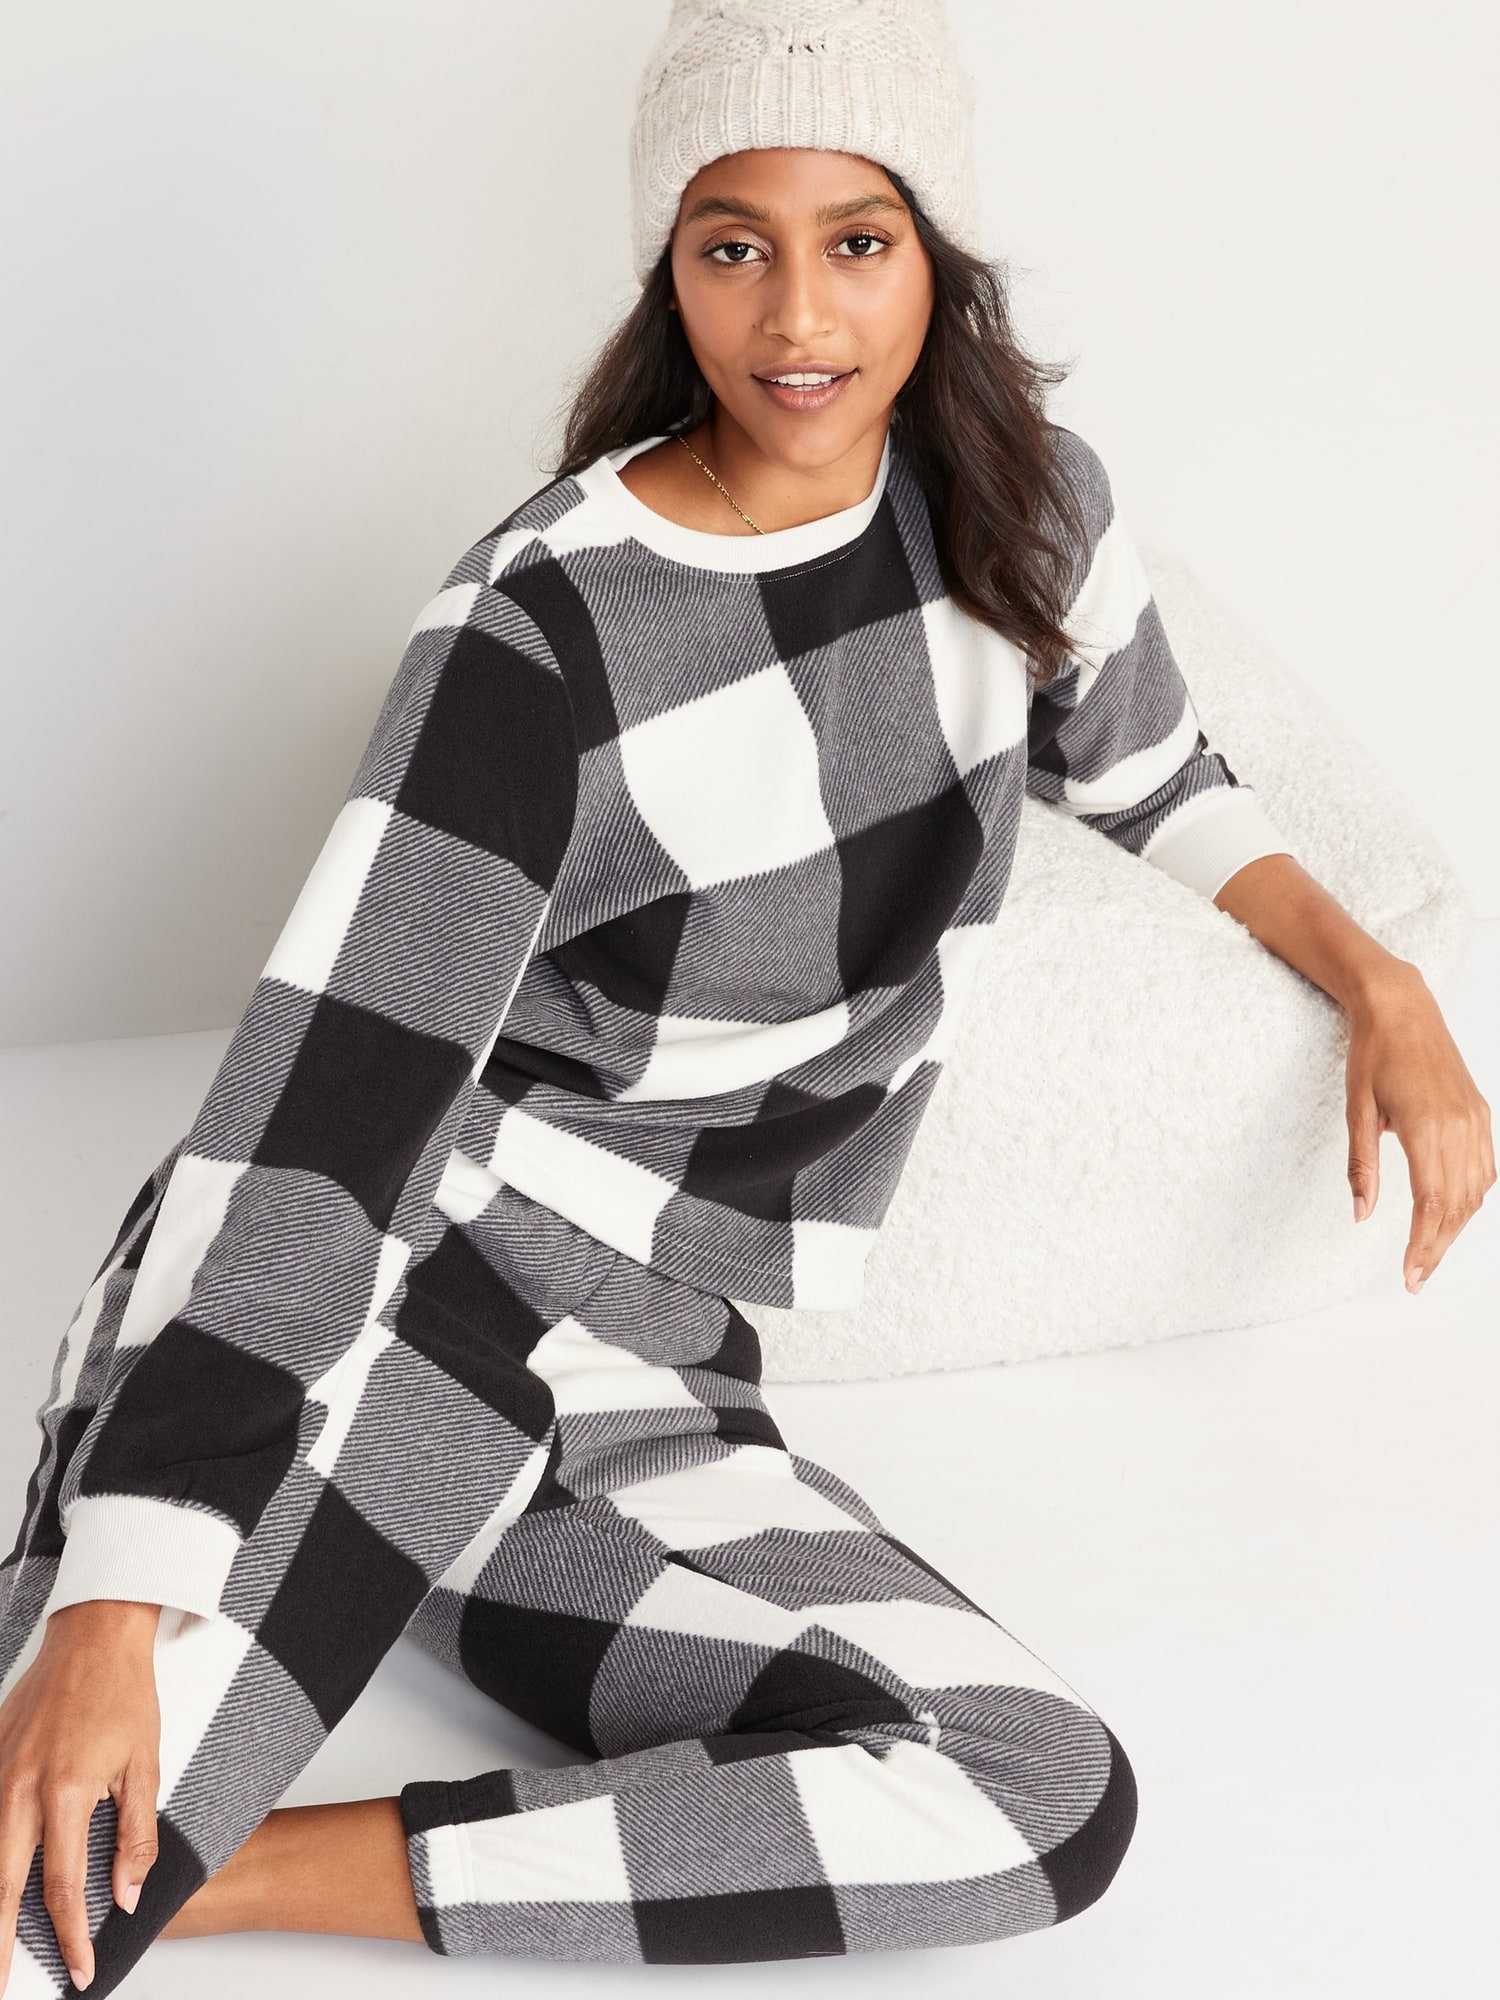 Plaid Grid Softie Aesthetic Pajama Pants for Women Black L